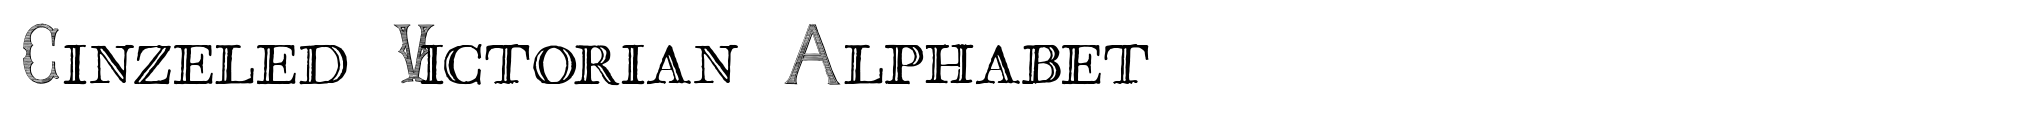 Cinzeled Victorian Alphabet image